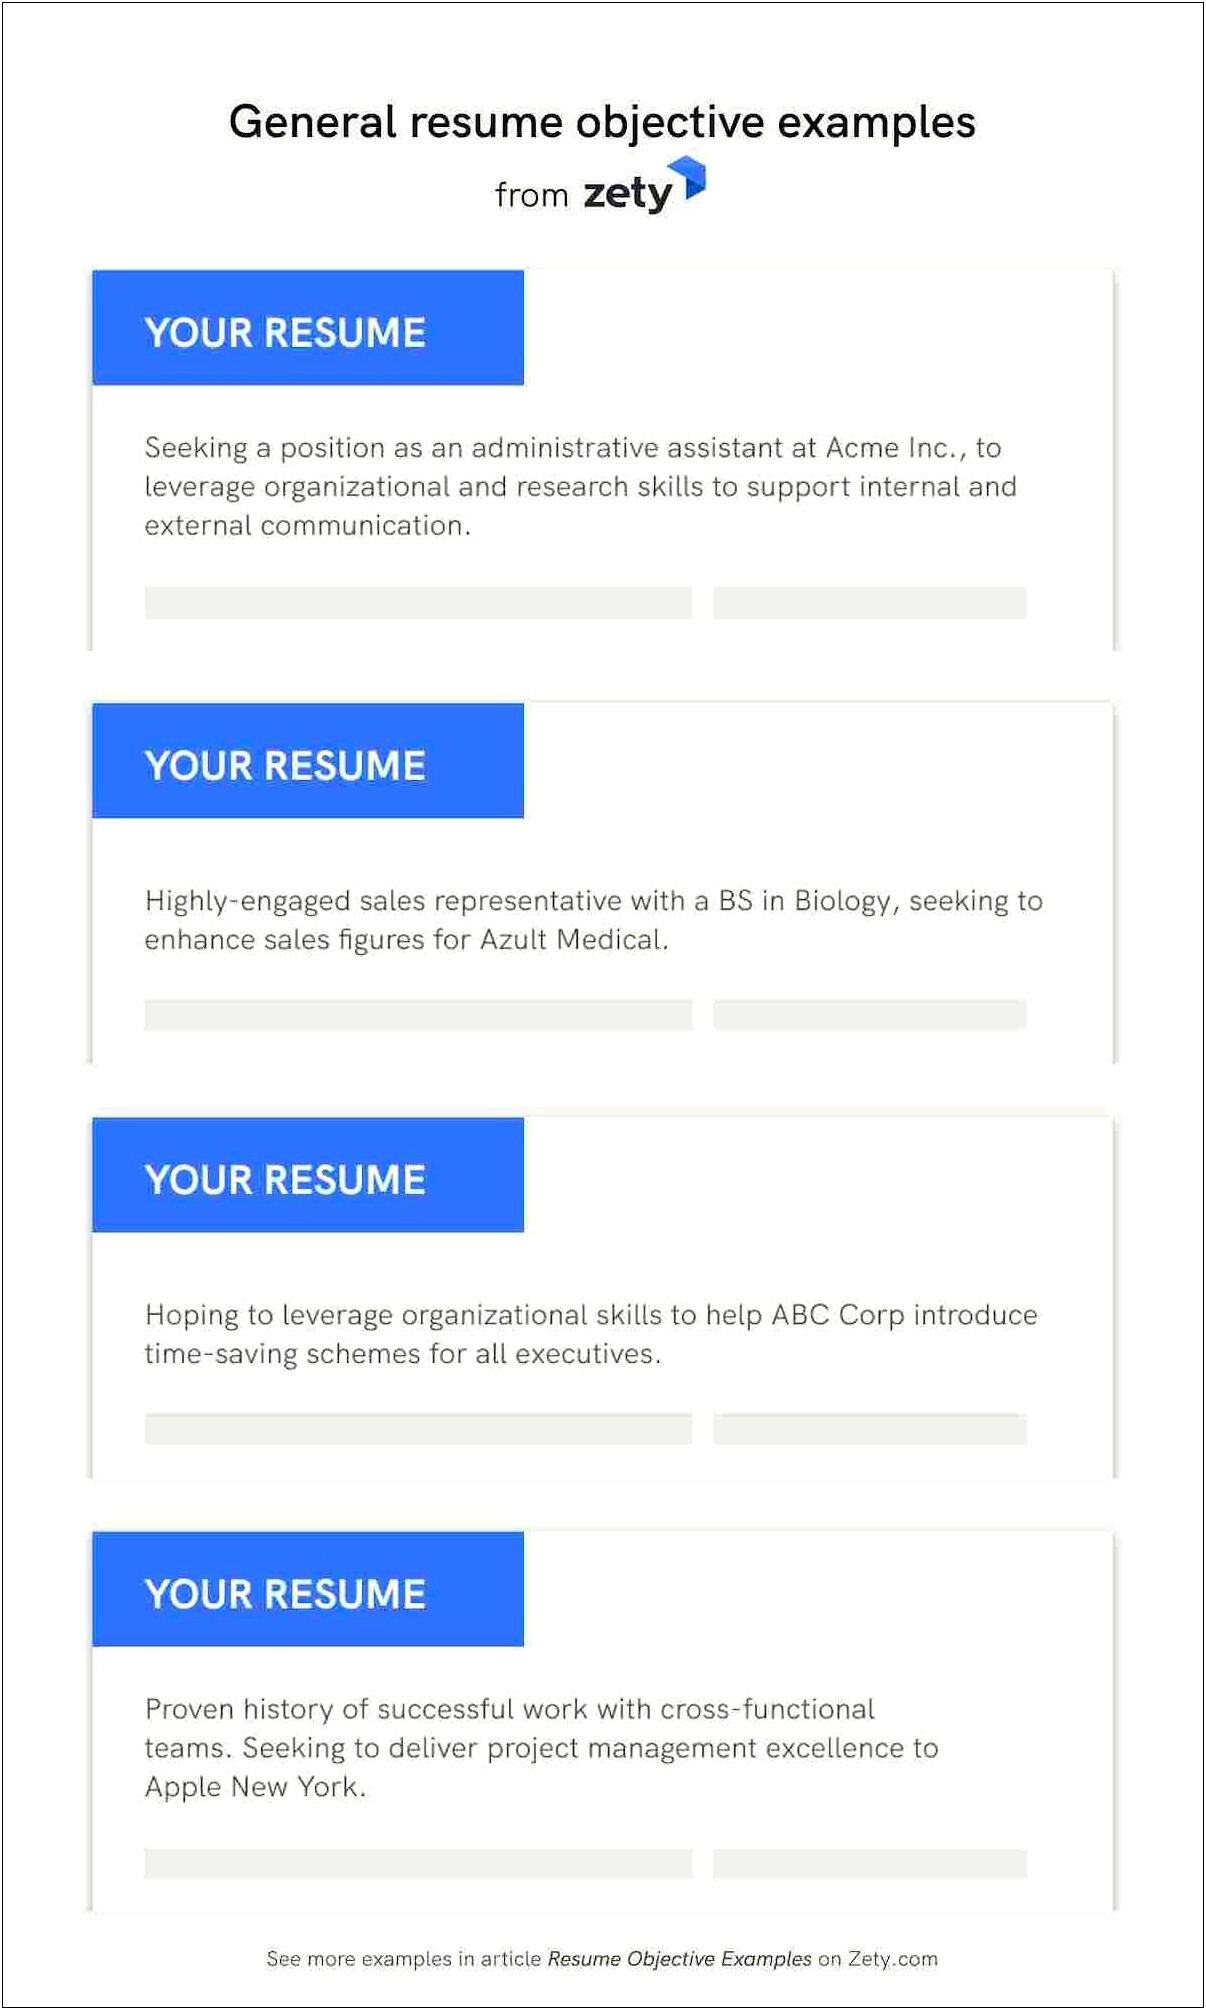 Sample Resume Objectives For Medical Representative